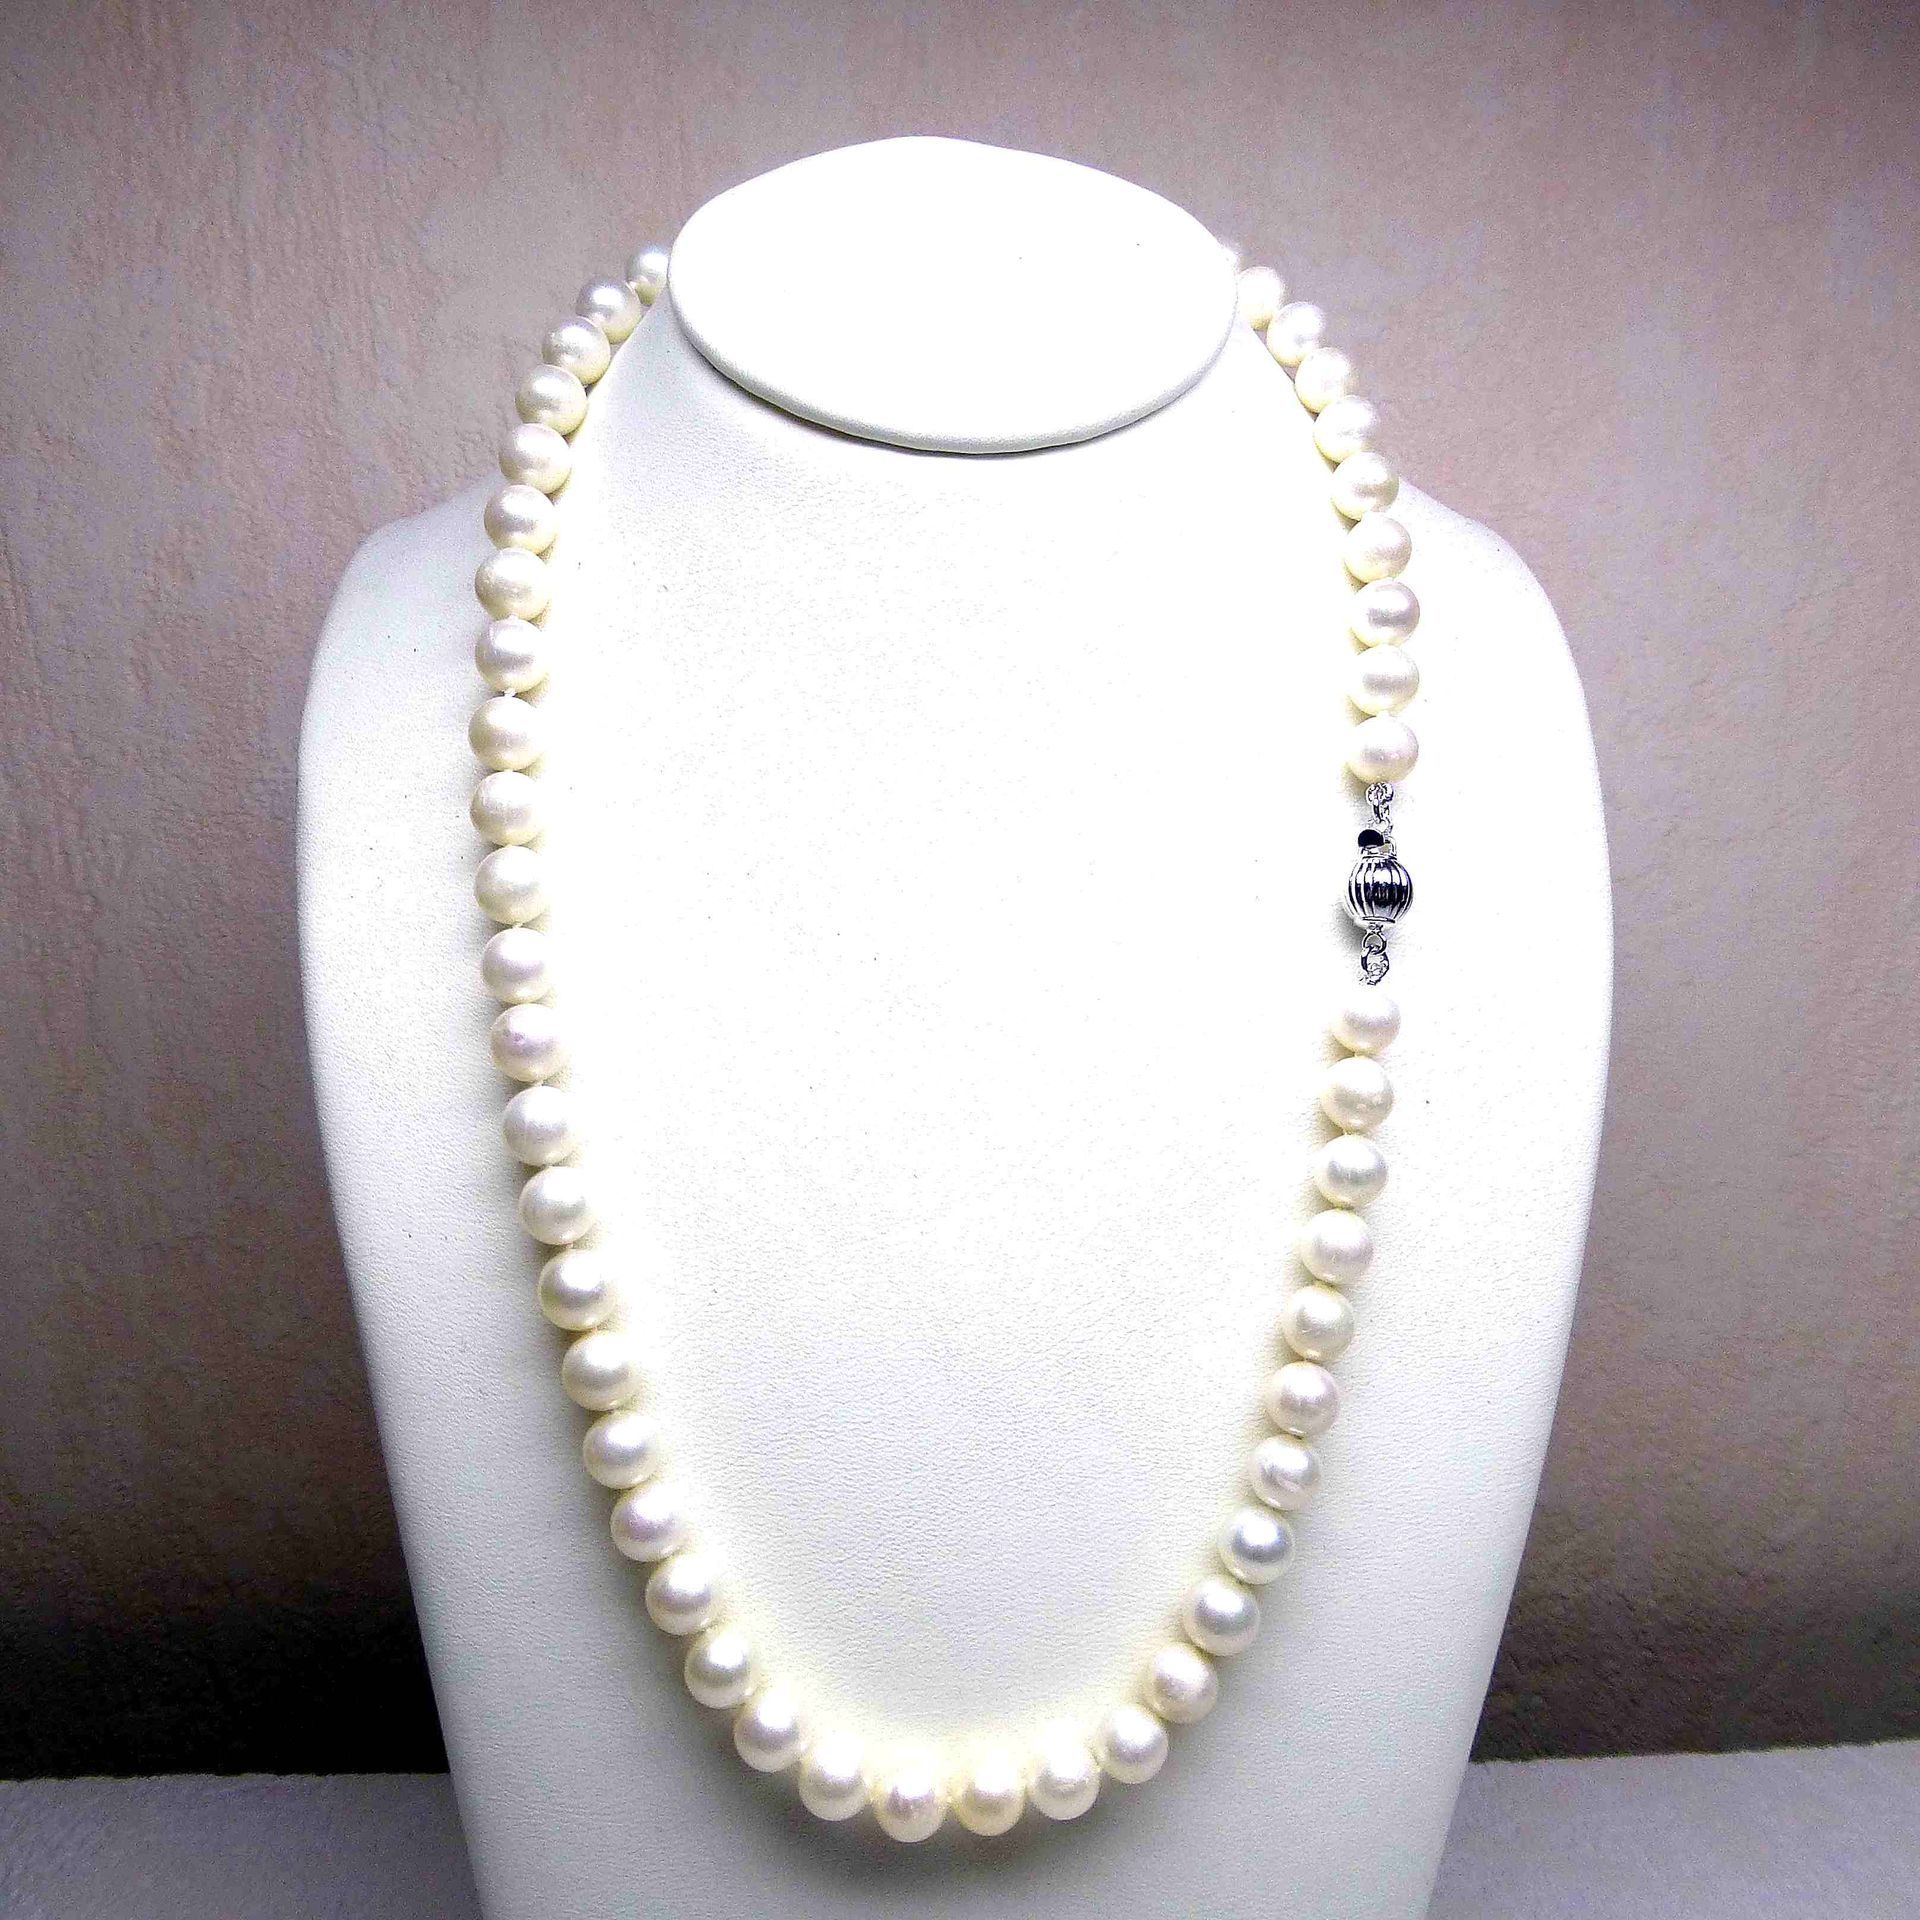 Null Una collana di perle coltivate natur+D11:G81elles diametro 7 - 7,5 mm di un&hellip;